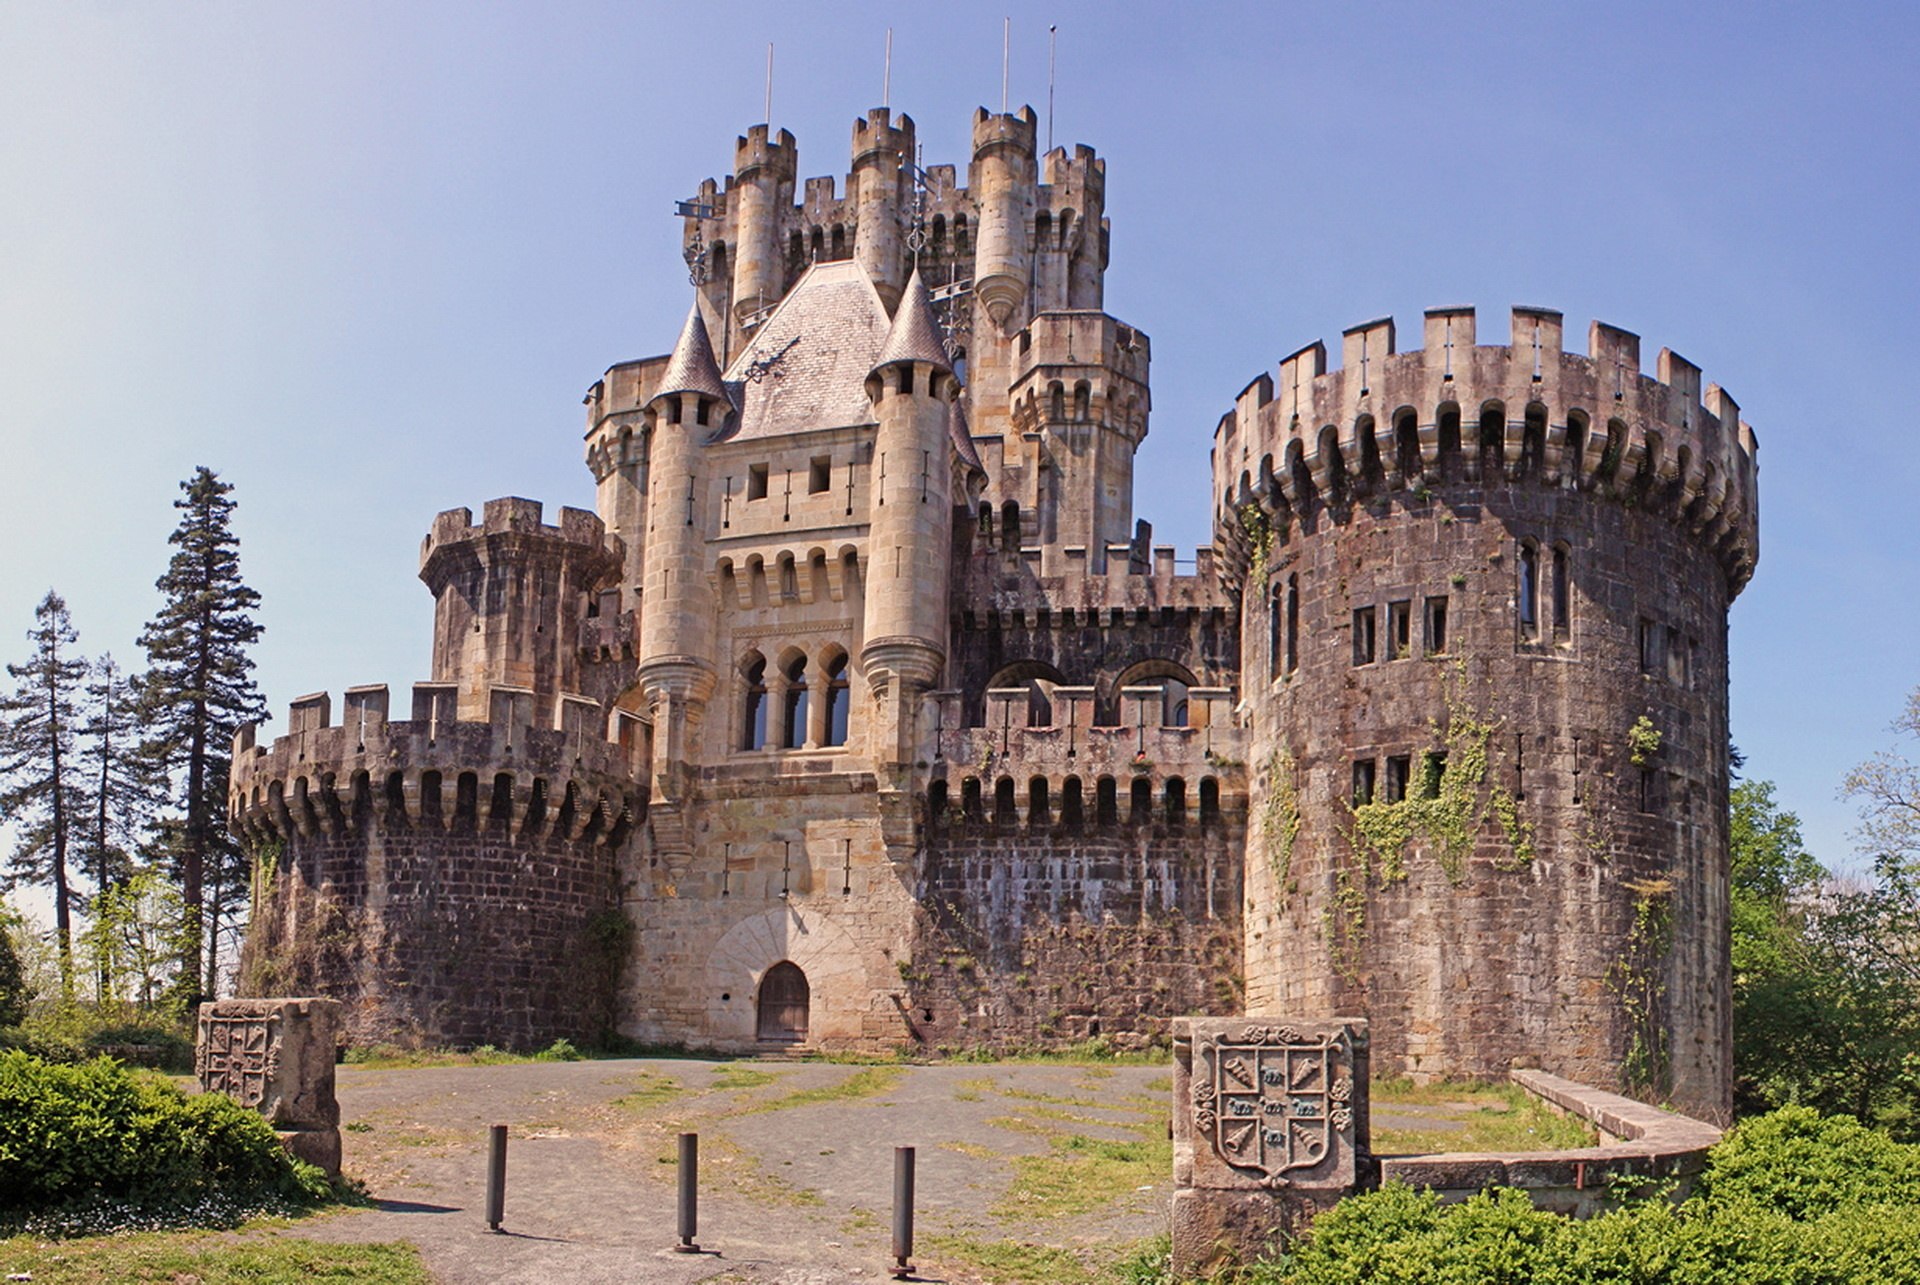 Замки 6 века. Замок Бутрон Испания. Бильбао замок Бутрон. Испания заброшенный замок Бутрон внутри. Замок Бодиам Англия романский стиль.